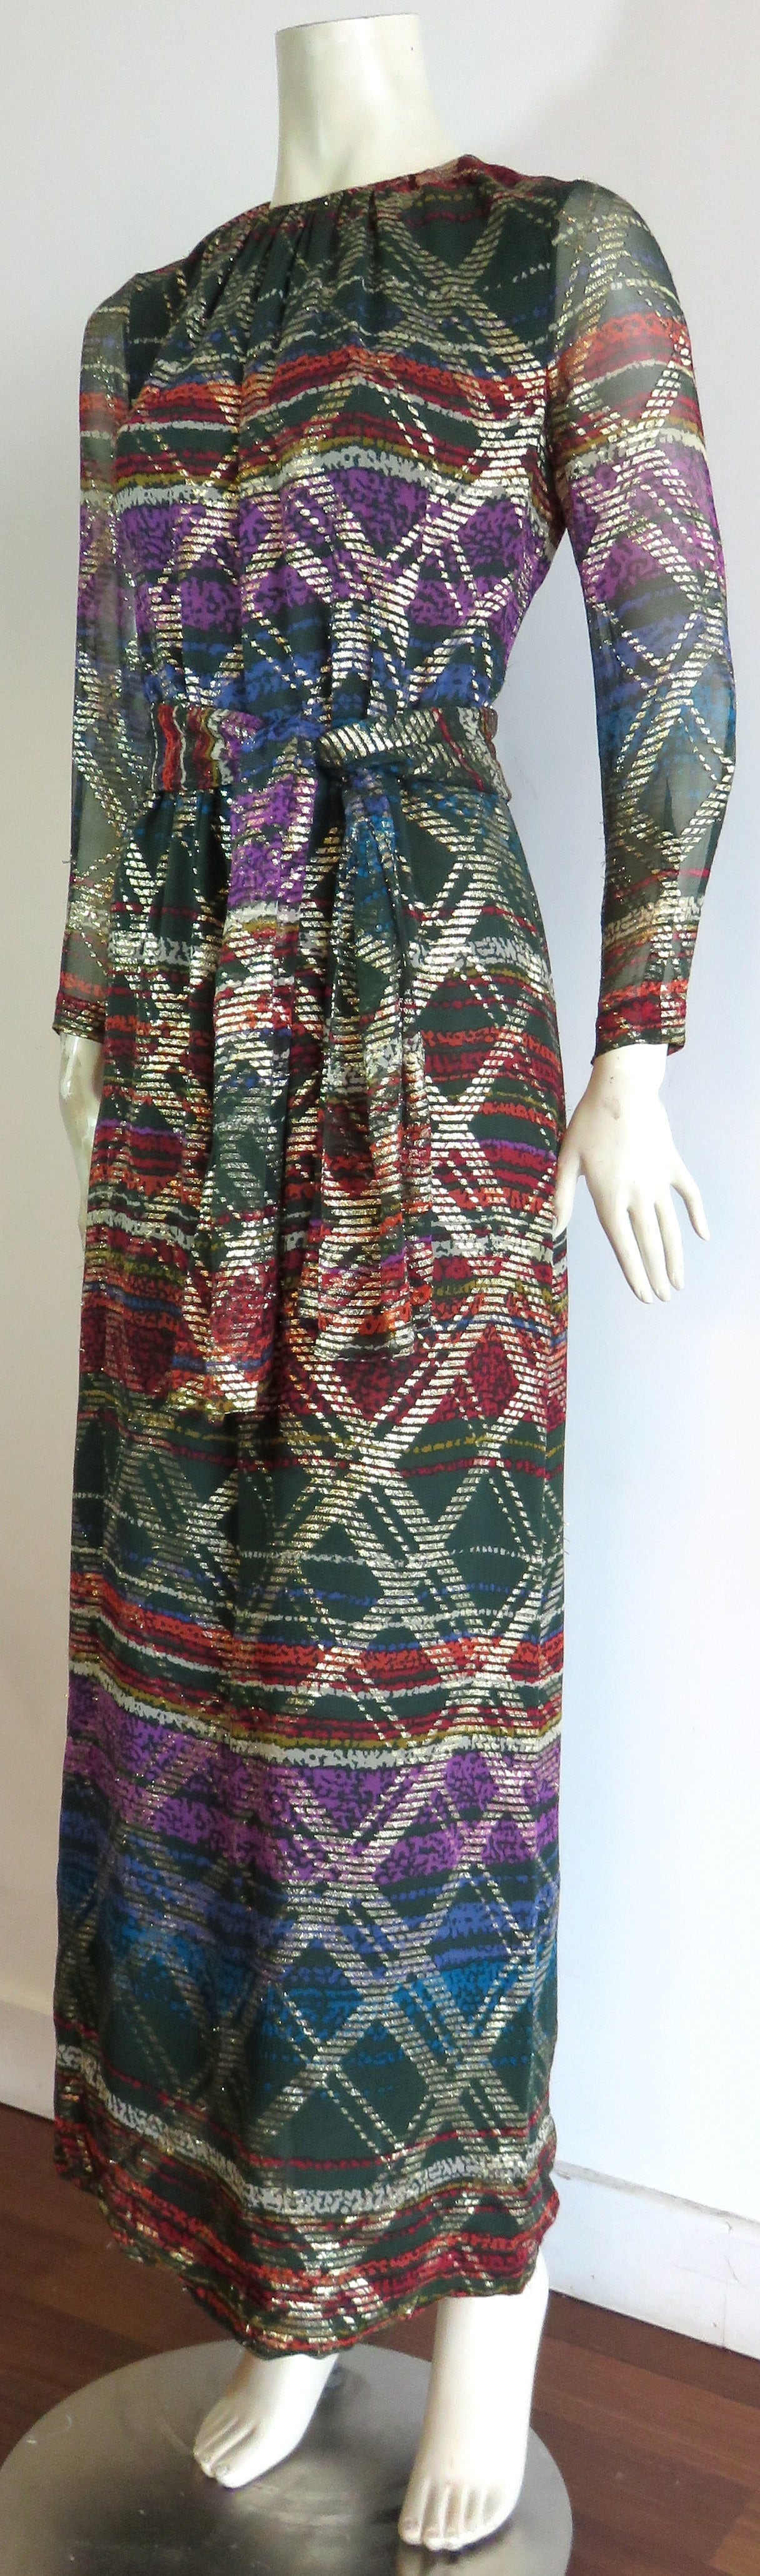 1975 PAULINE TRIGERE Metallic silk chiffon evening dress In Excellent Condition For Sale In Newport Beach, CA